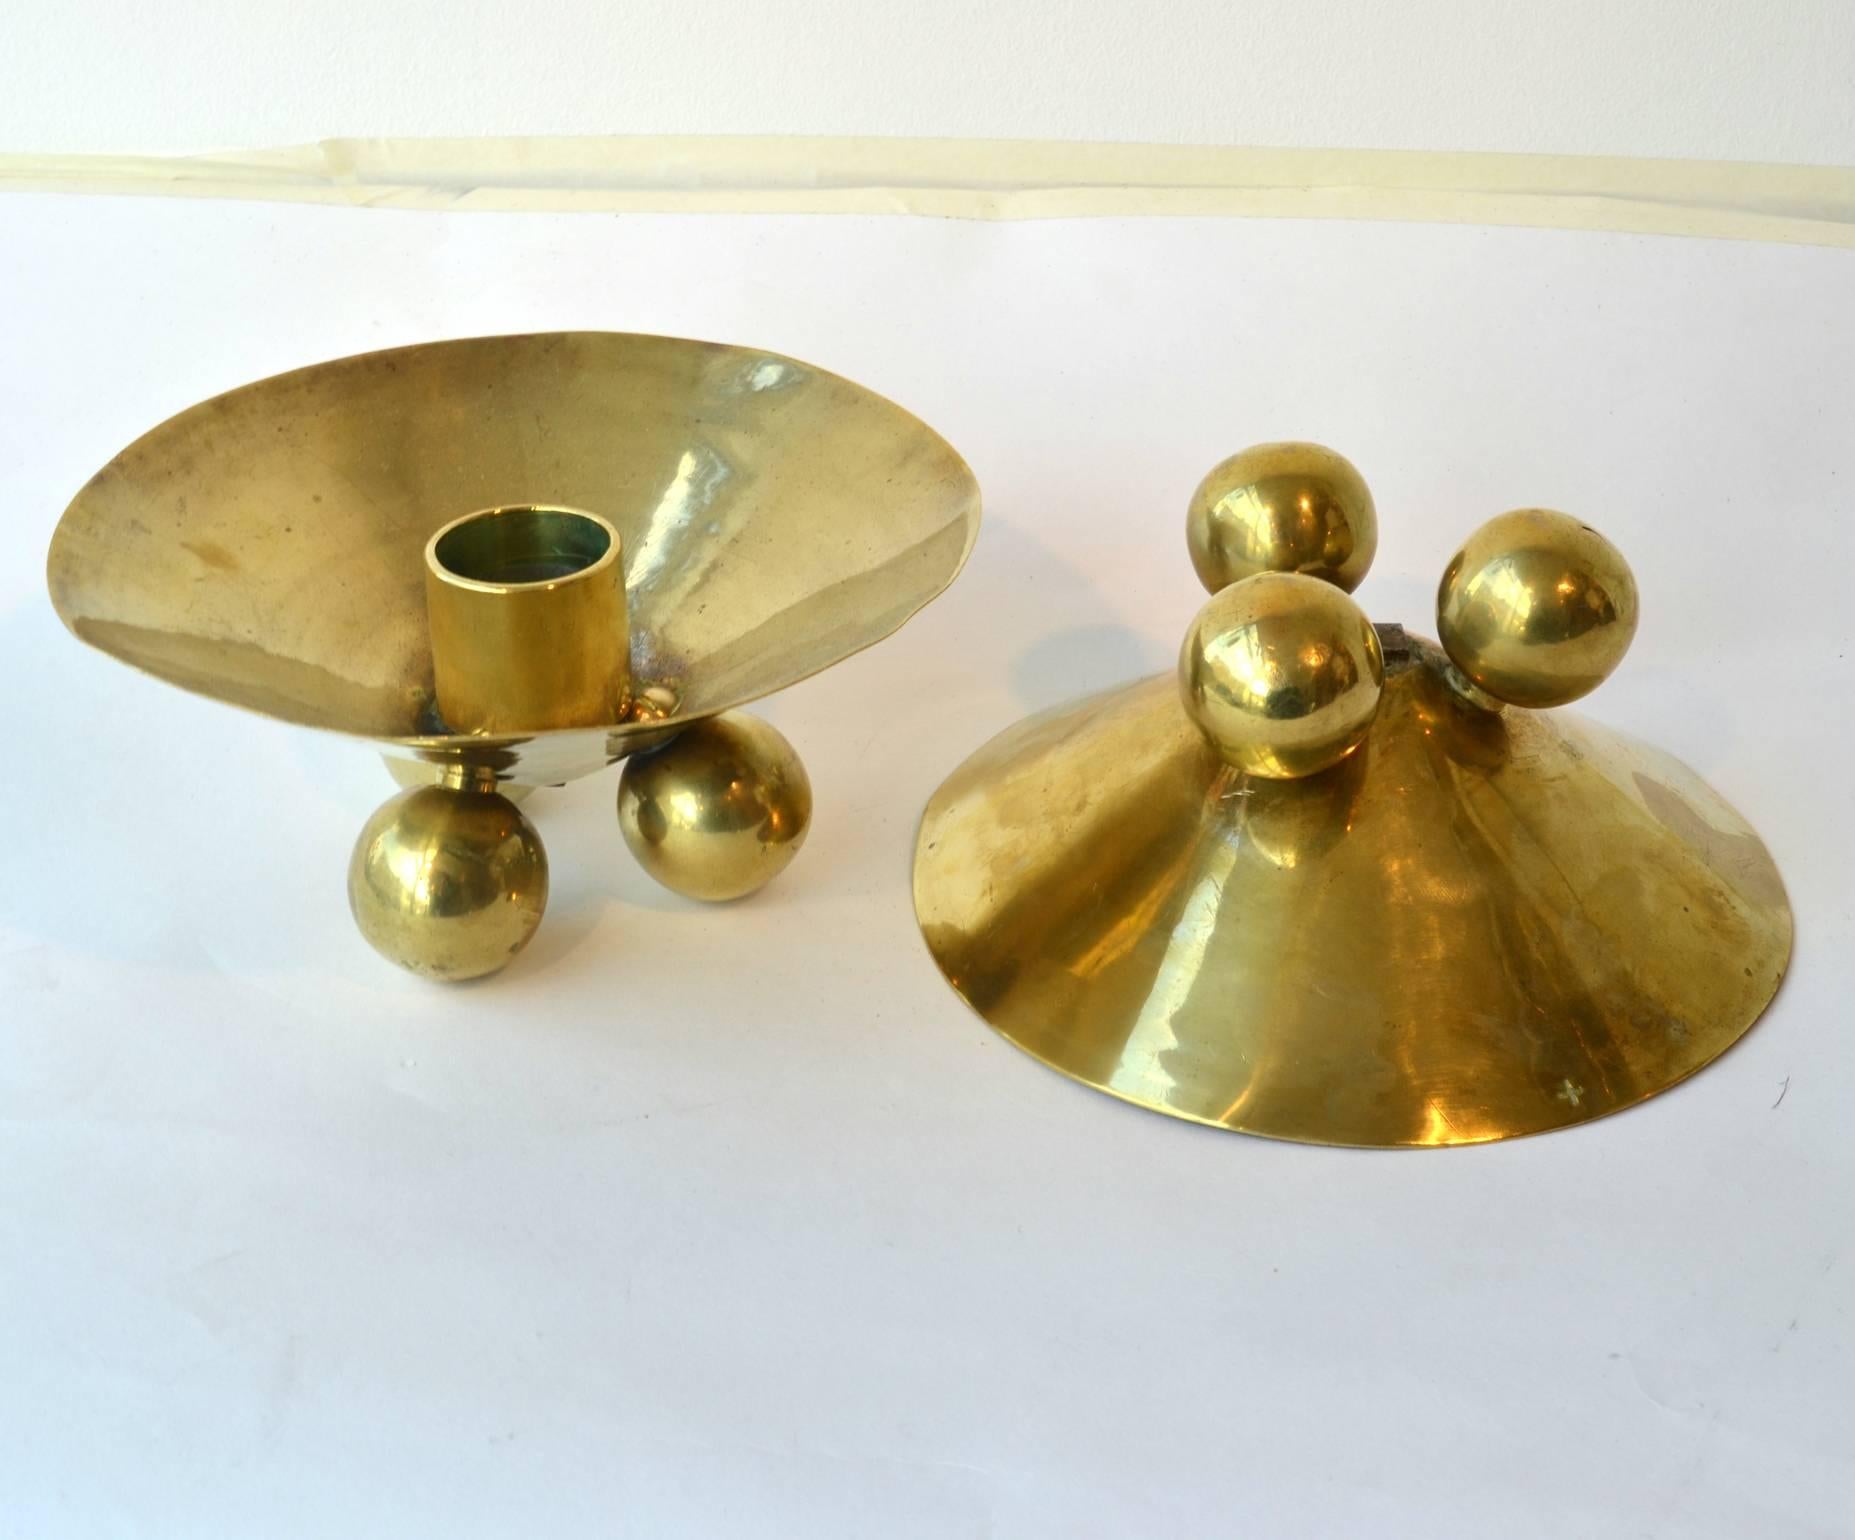 Sculptural pair of brass candlesticks handcrafted on three ball shaped legs.